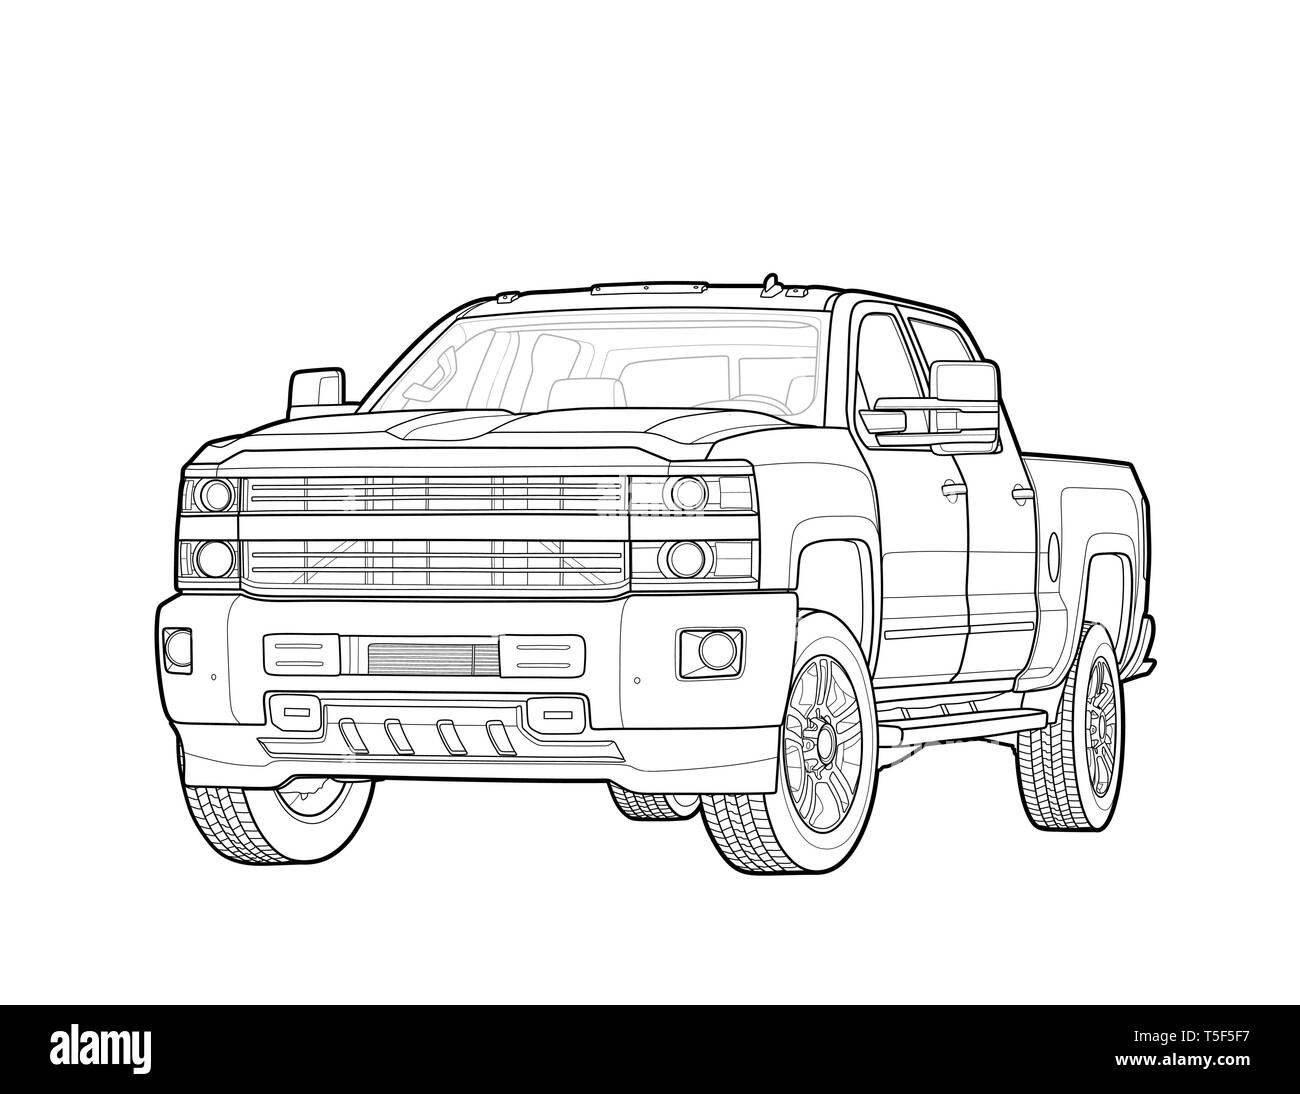 Camioneta dibujar vectores aislado en blanco Imagen Vector de stock - Alamy